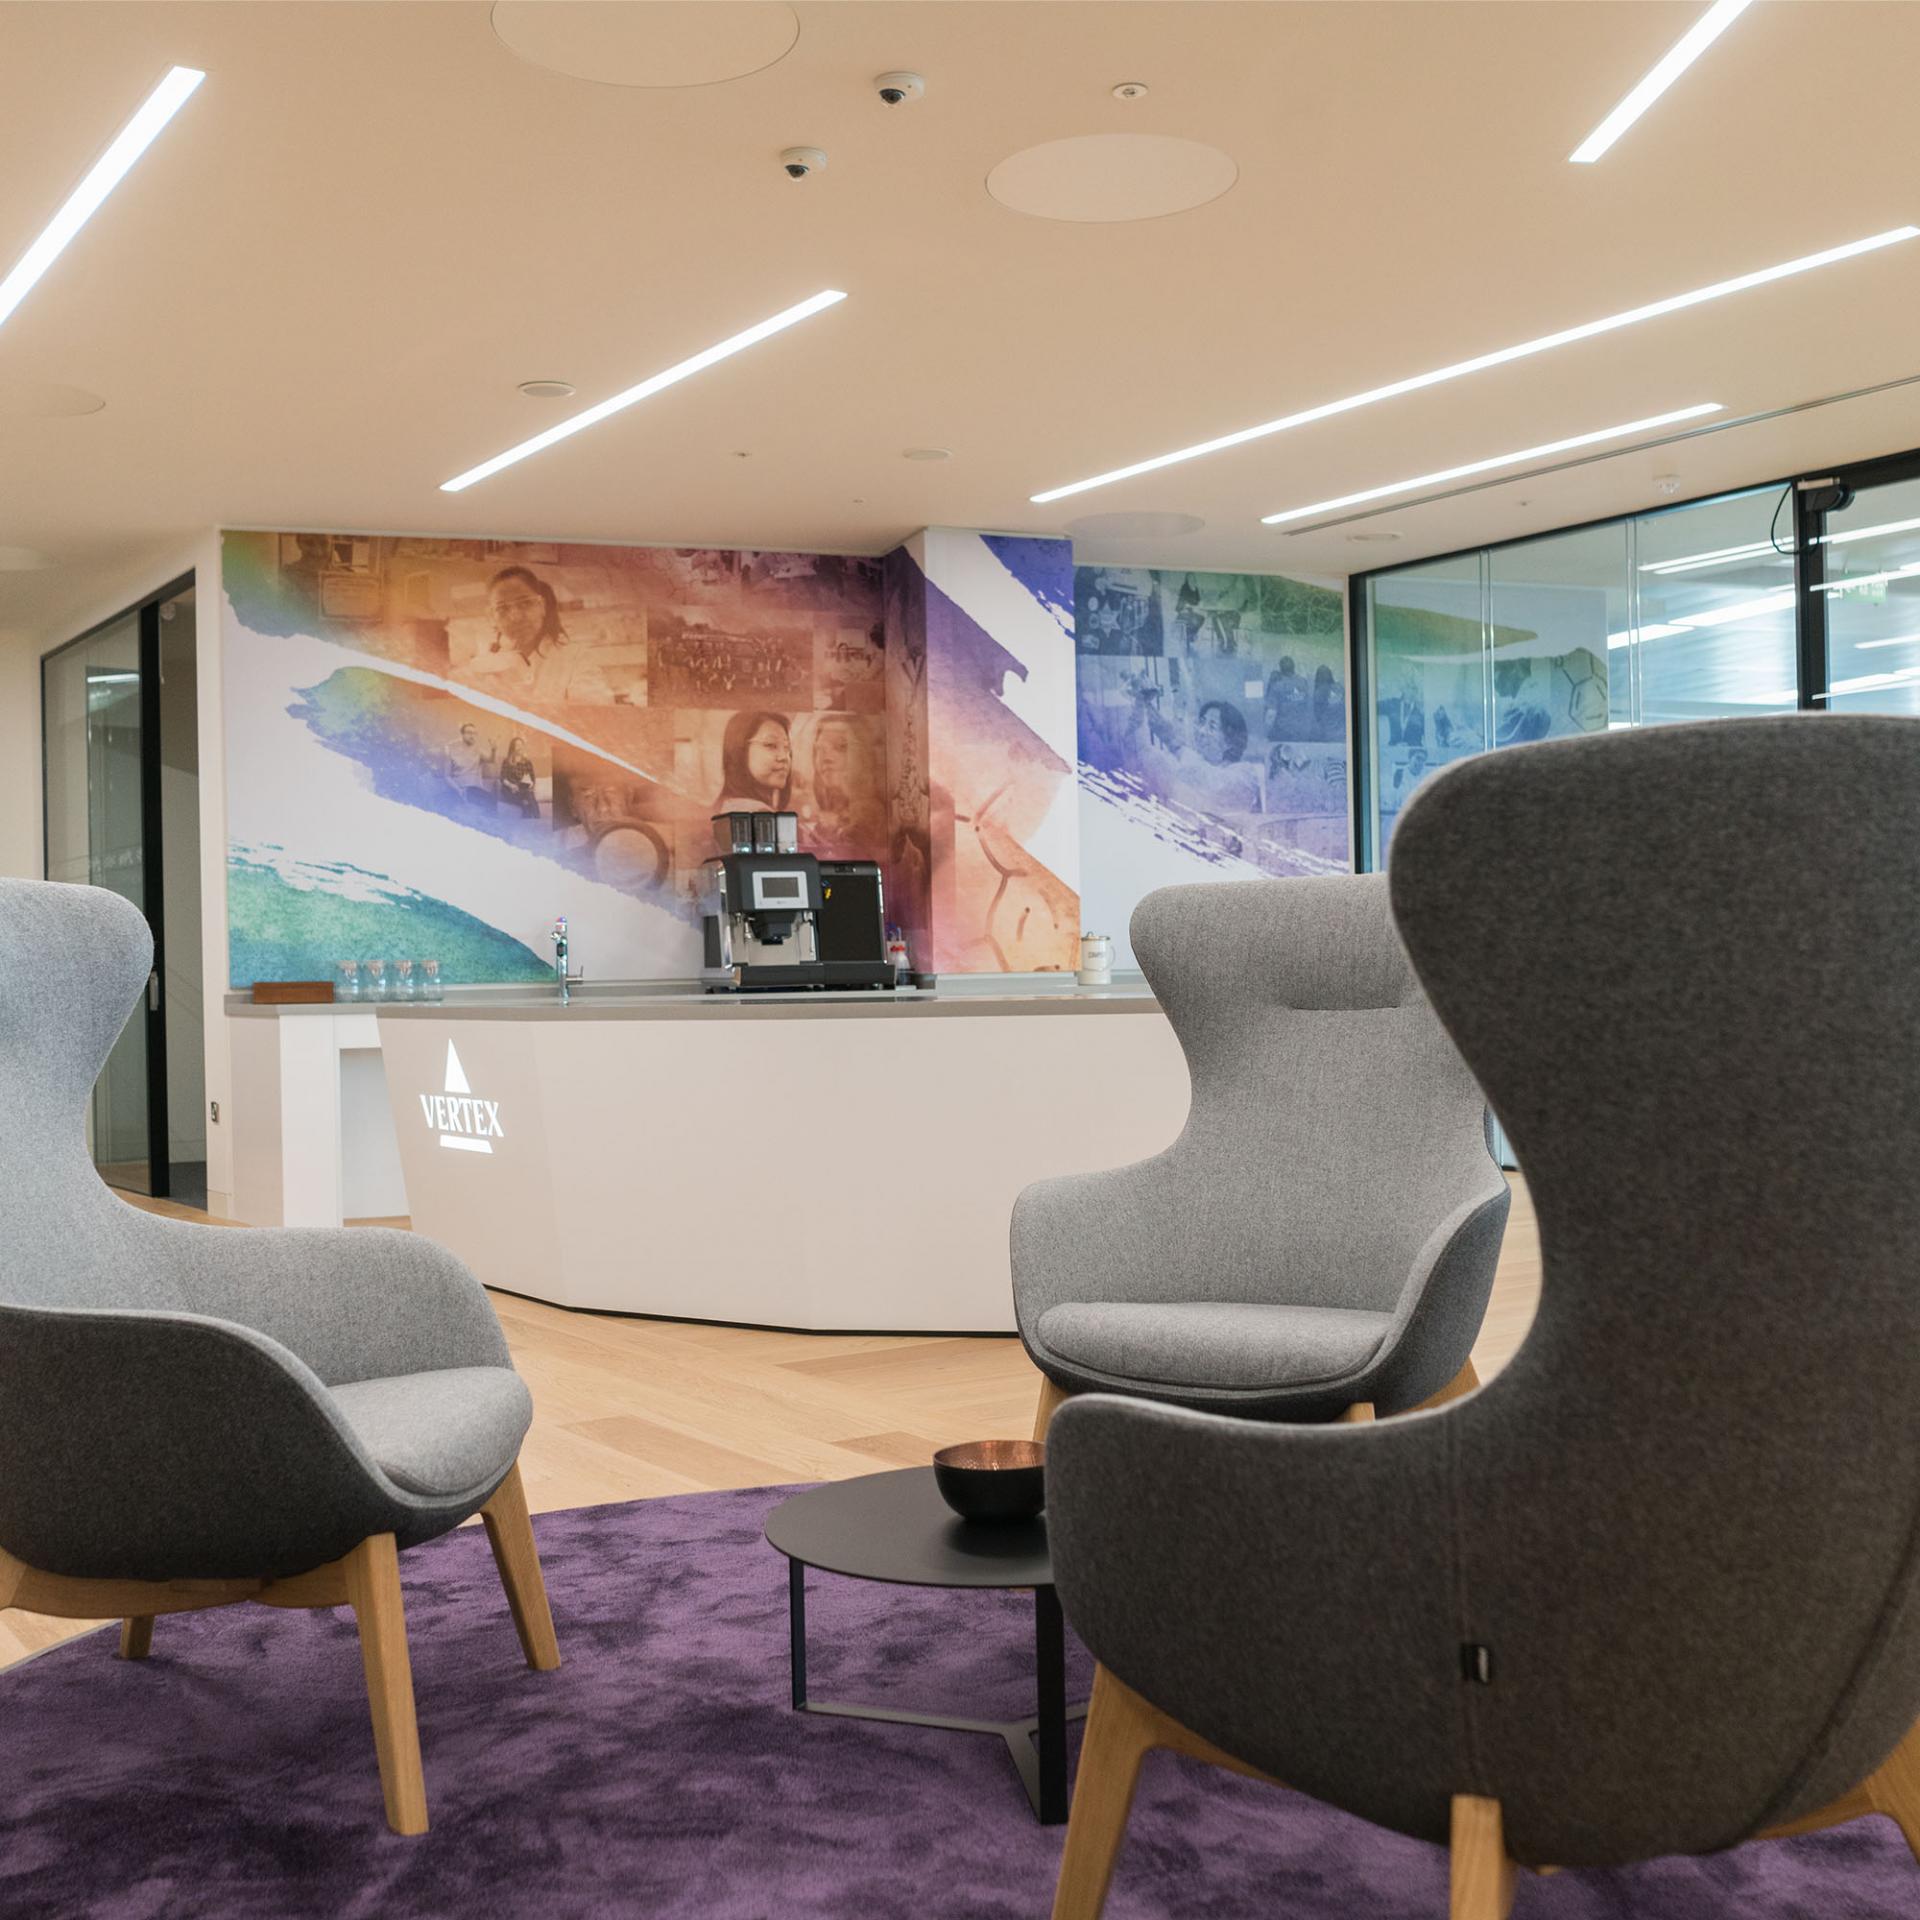 Reception area at the Vertex Pharmaceuticals international headquarters in London